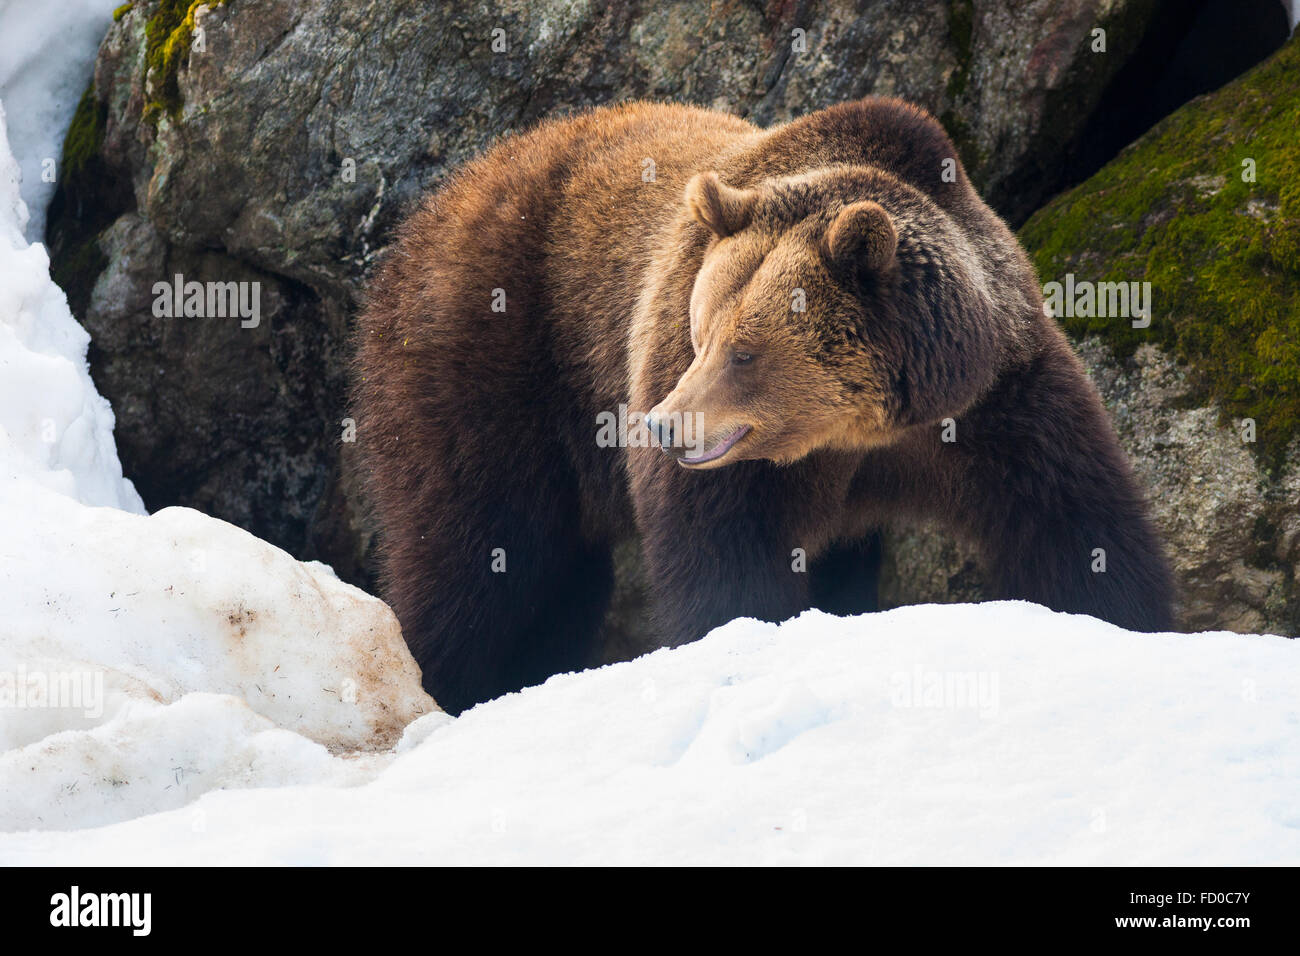 Europeo femminile l'orso bruno (Ursus arctos arctos) wolking nel bosco, parco nazionale della Foresta Bavarese, Germania. Foto Stock